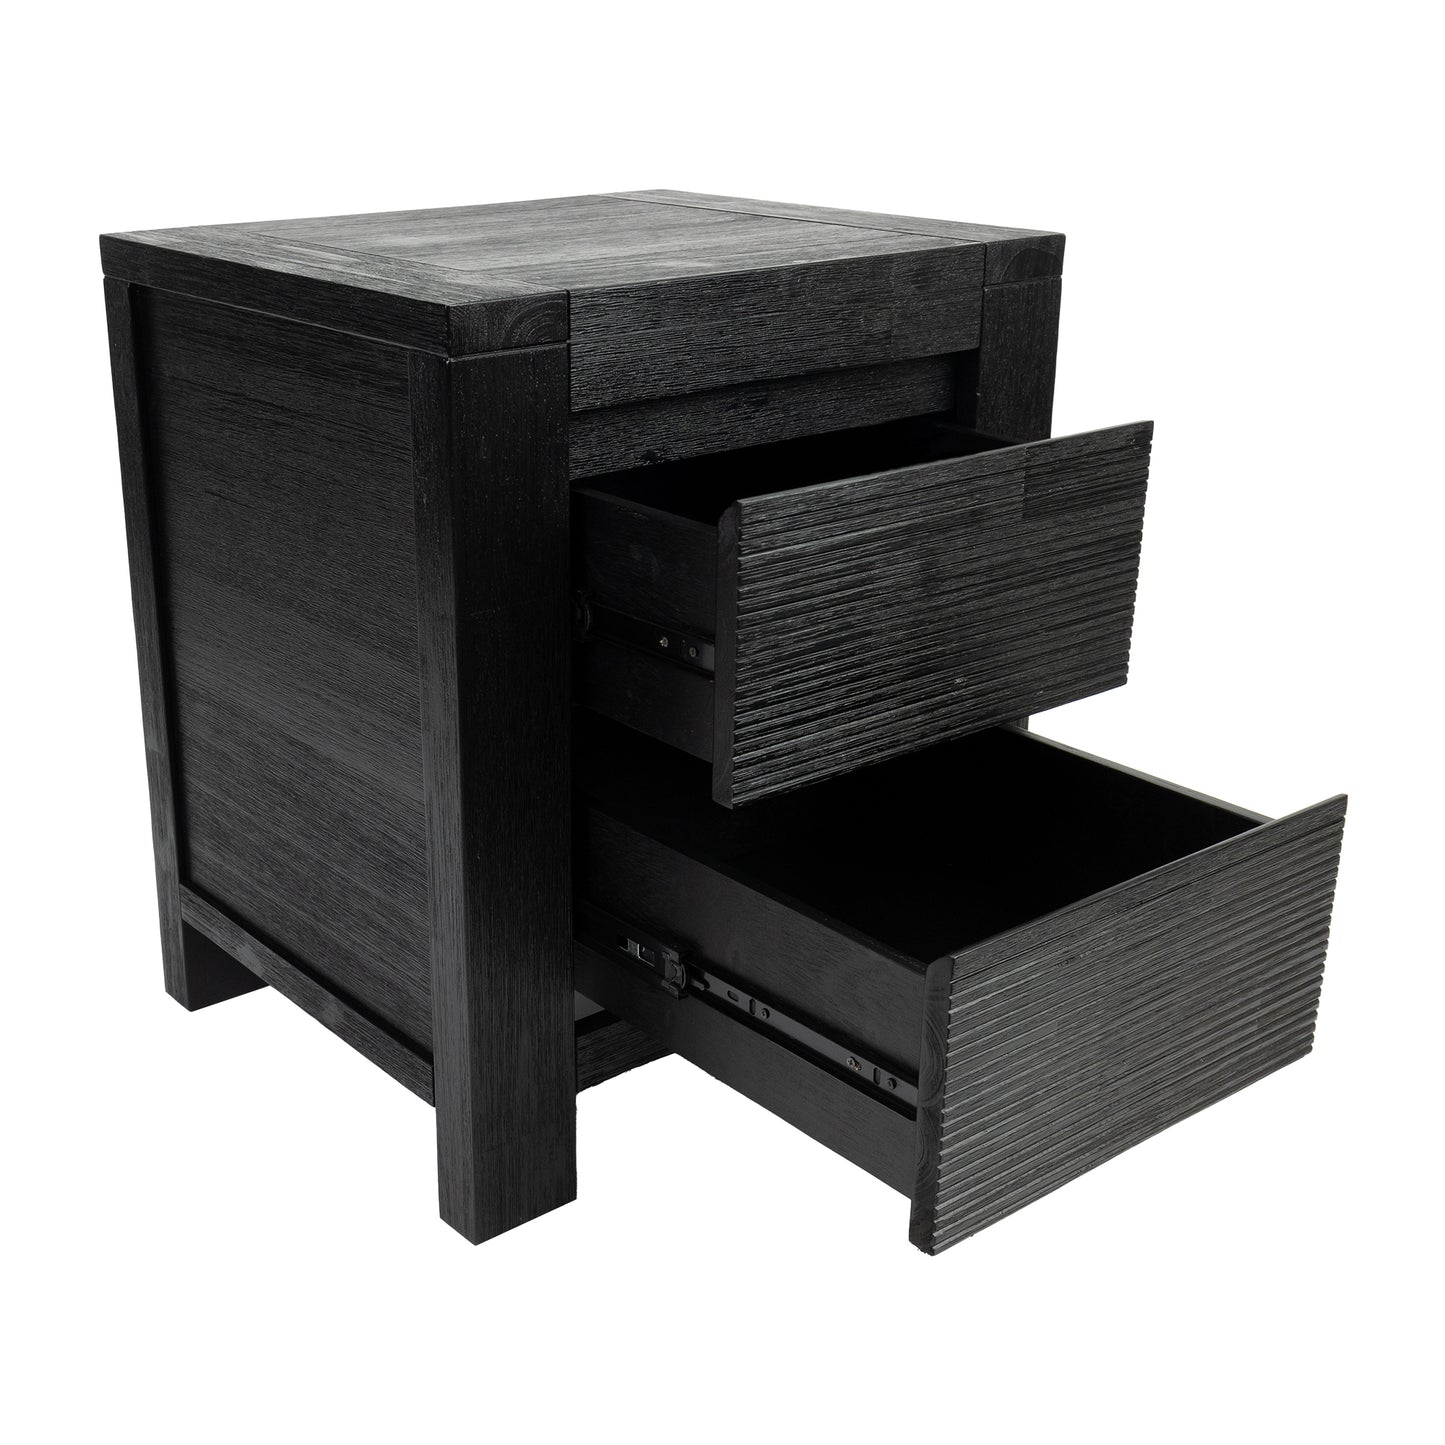 Tofino 2 Drawer Bedside Table - Black